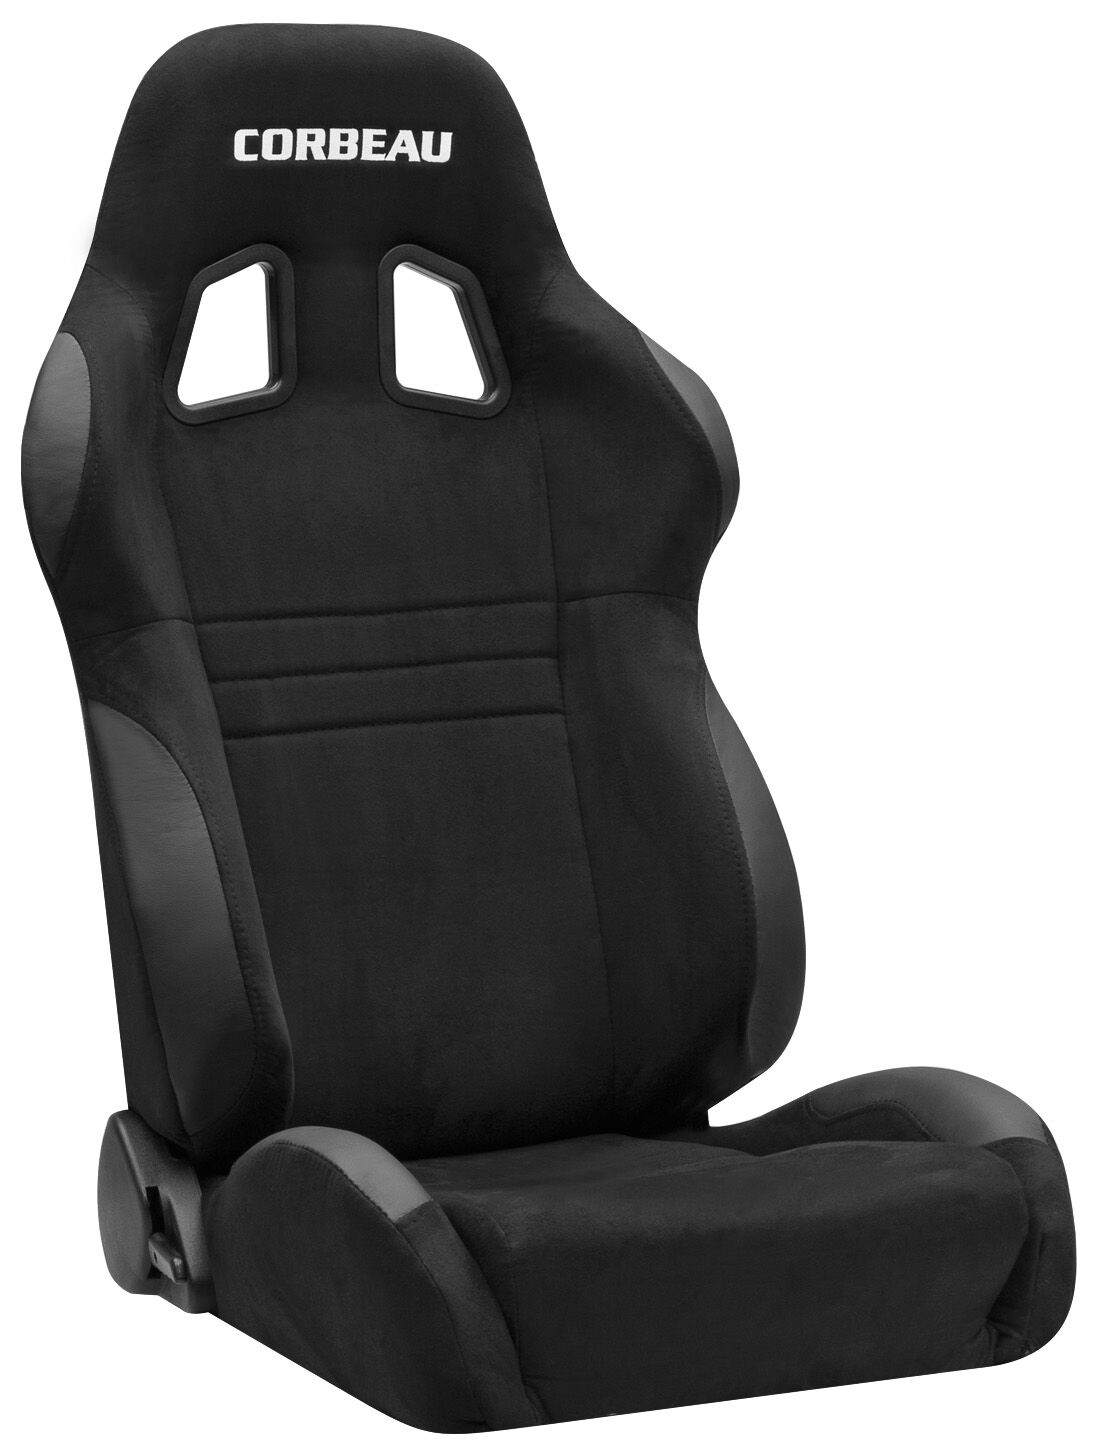 Corbeau A4 Seats - Black Microsuede